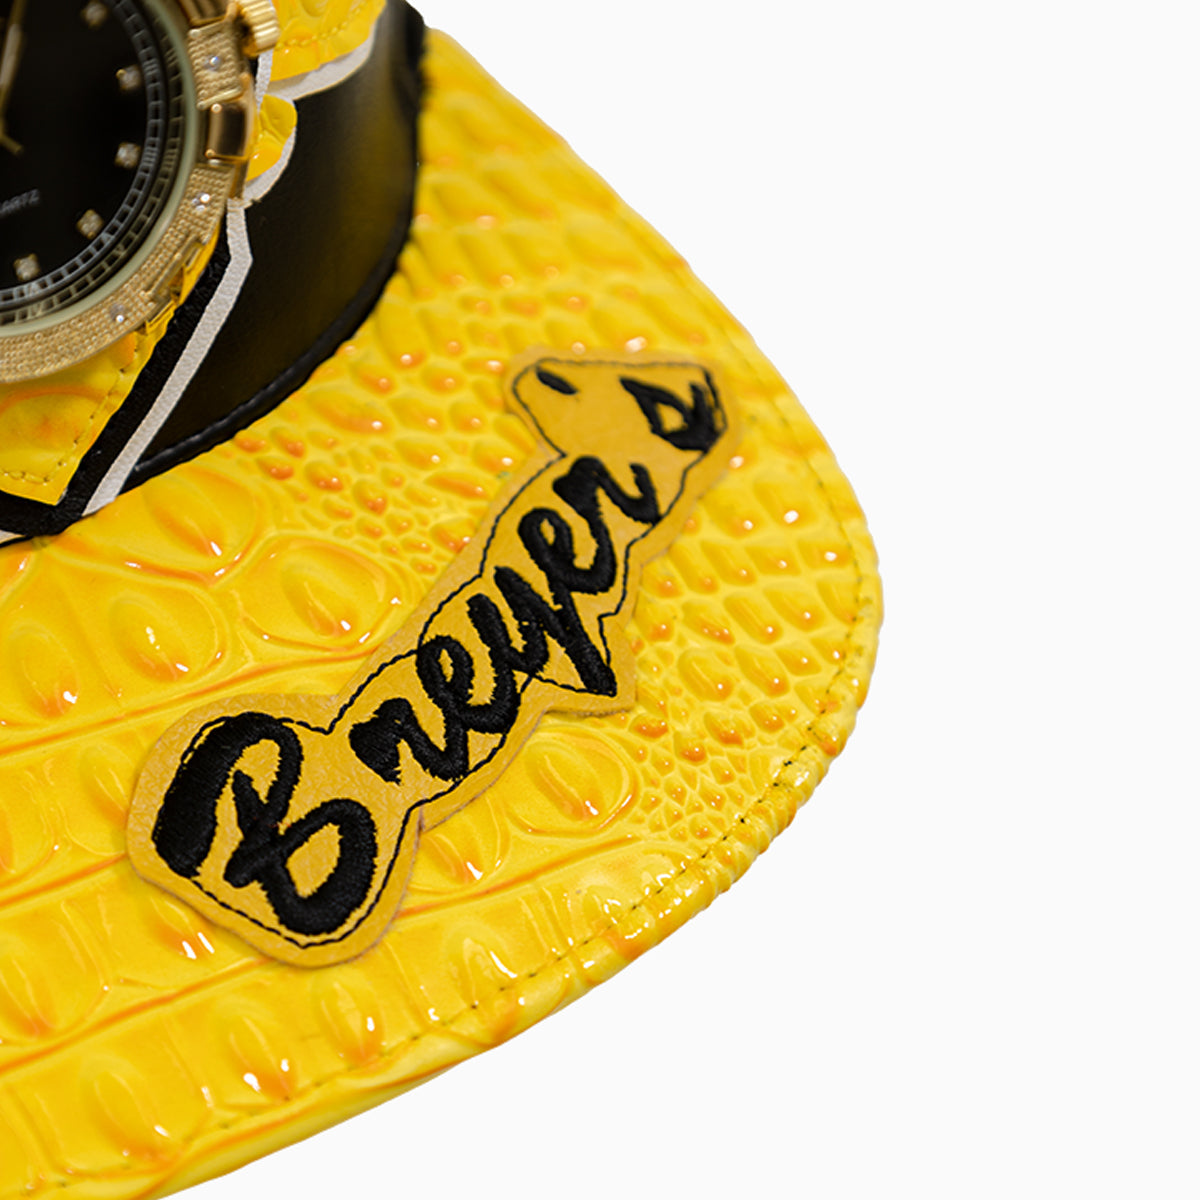 Breyer's Buck 50 Leather Watch Hat With Logo